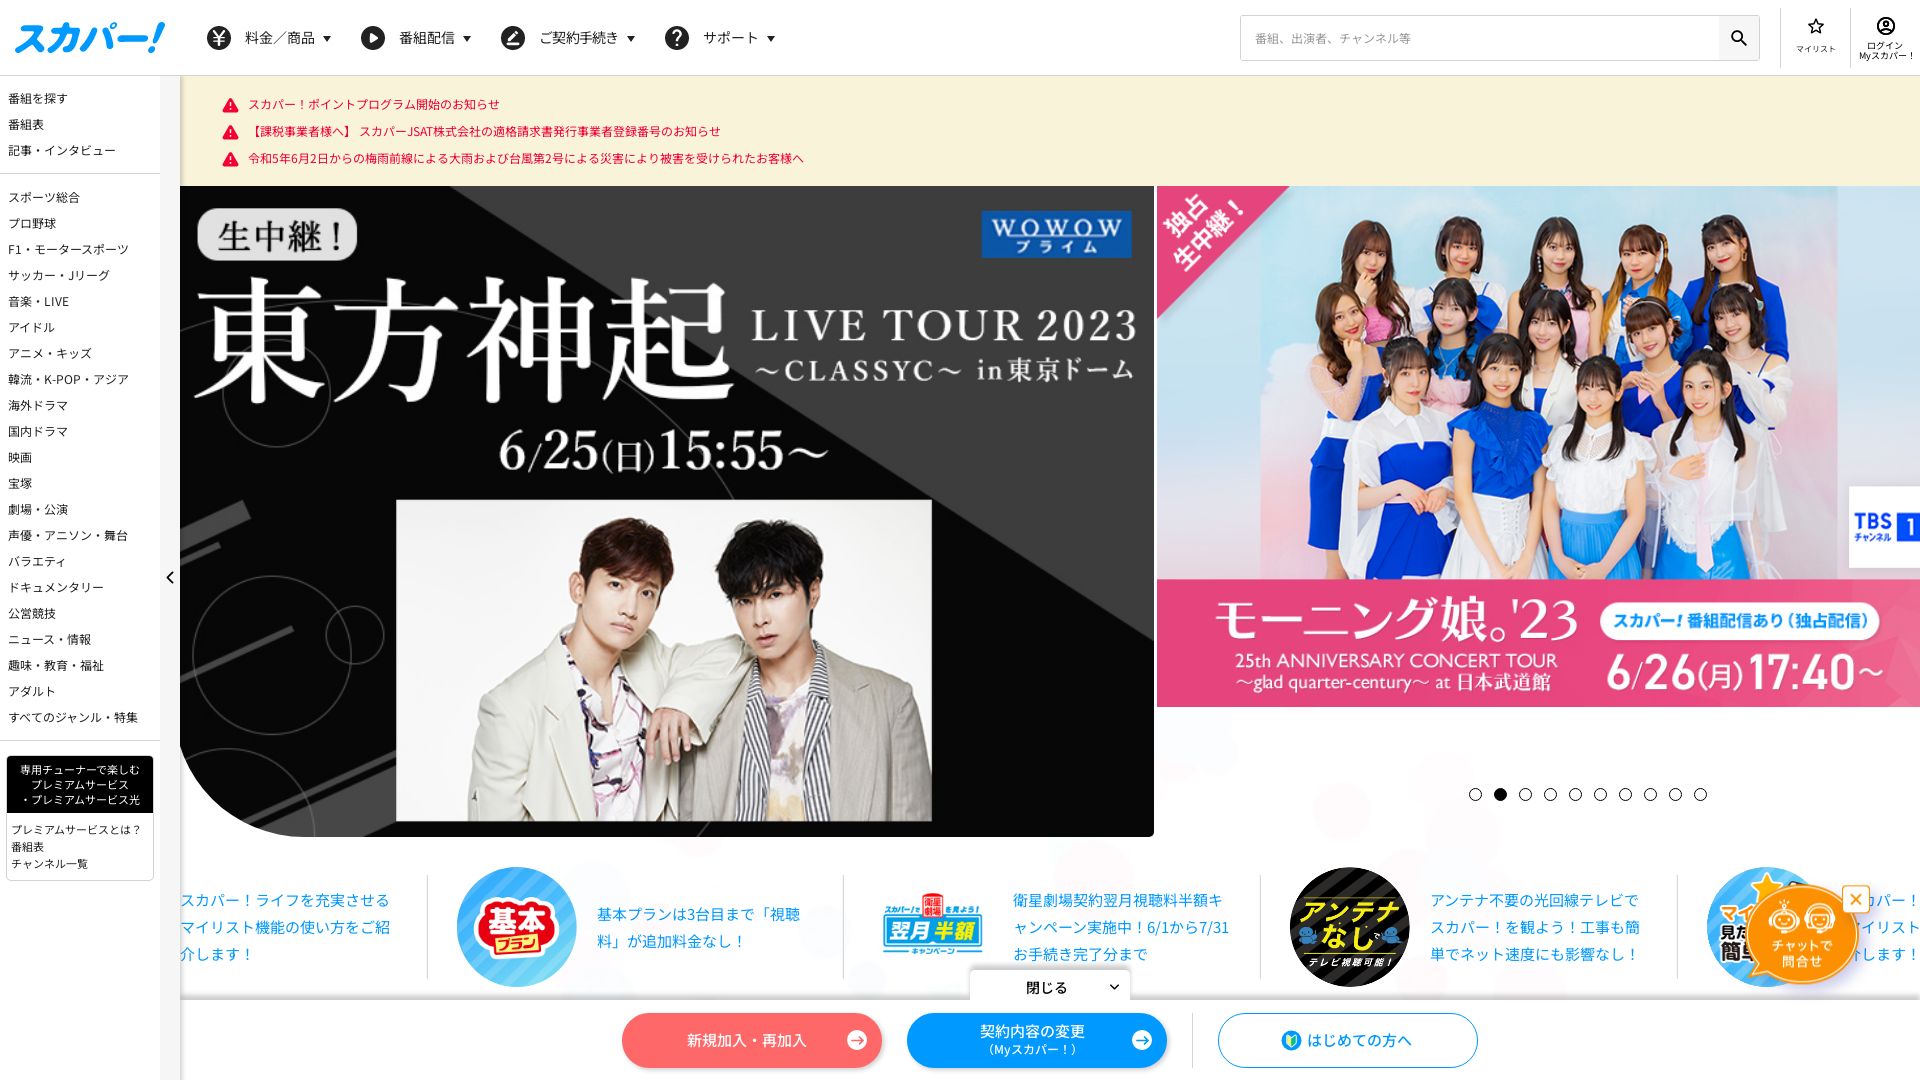 Status do site skyperfectv.co.jp está   ONLINE